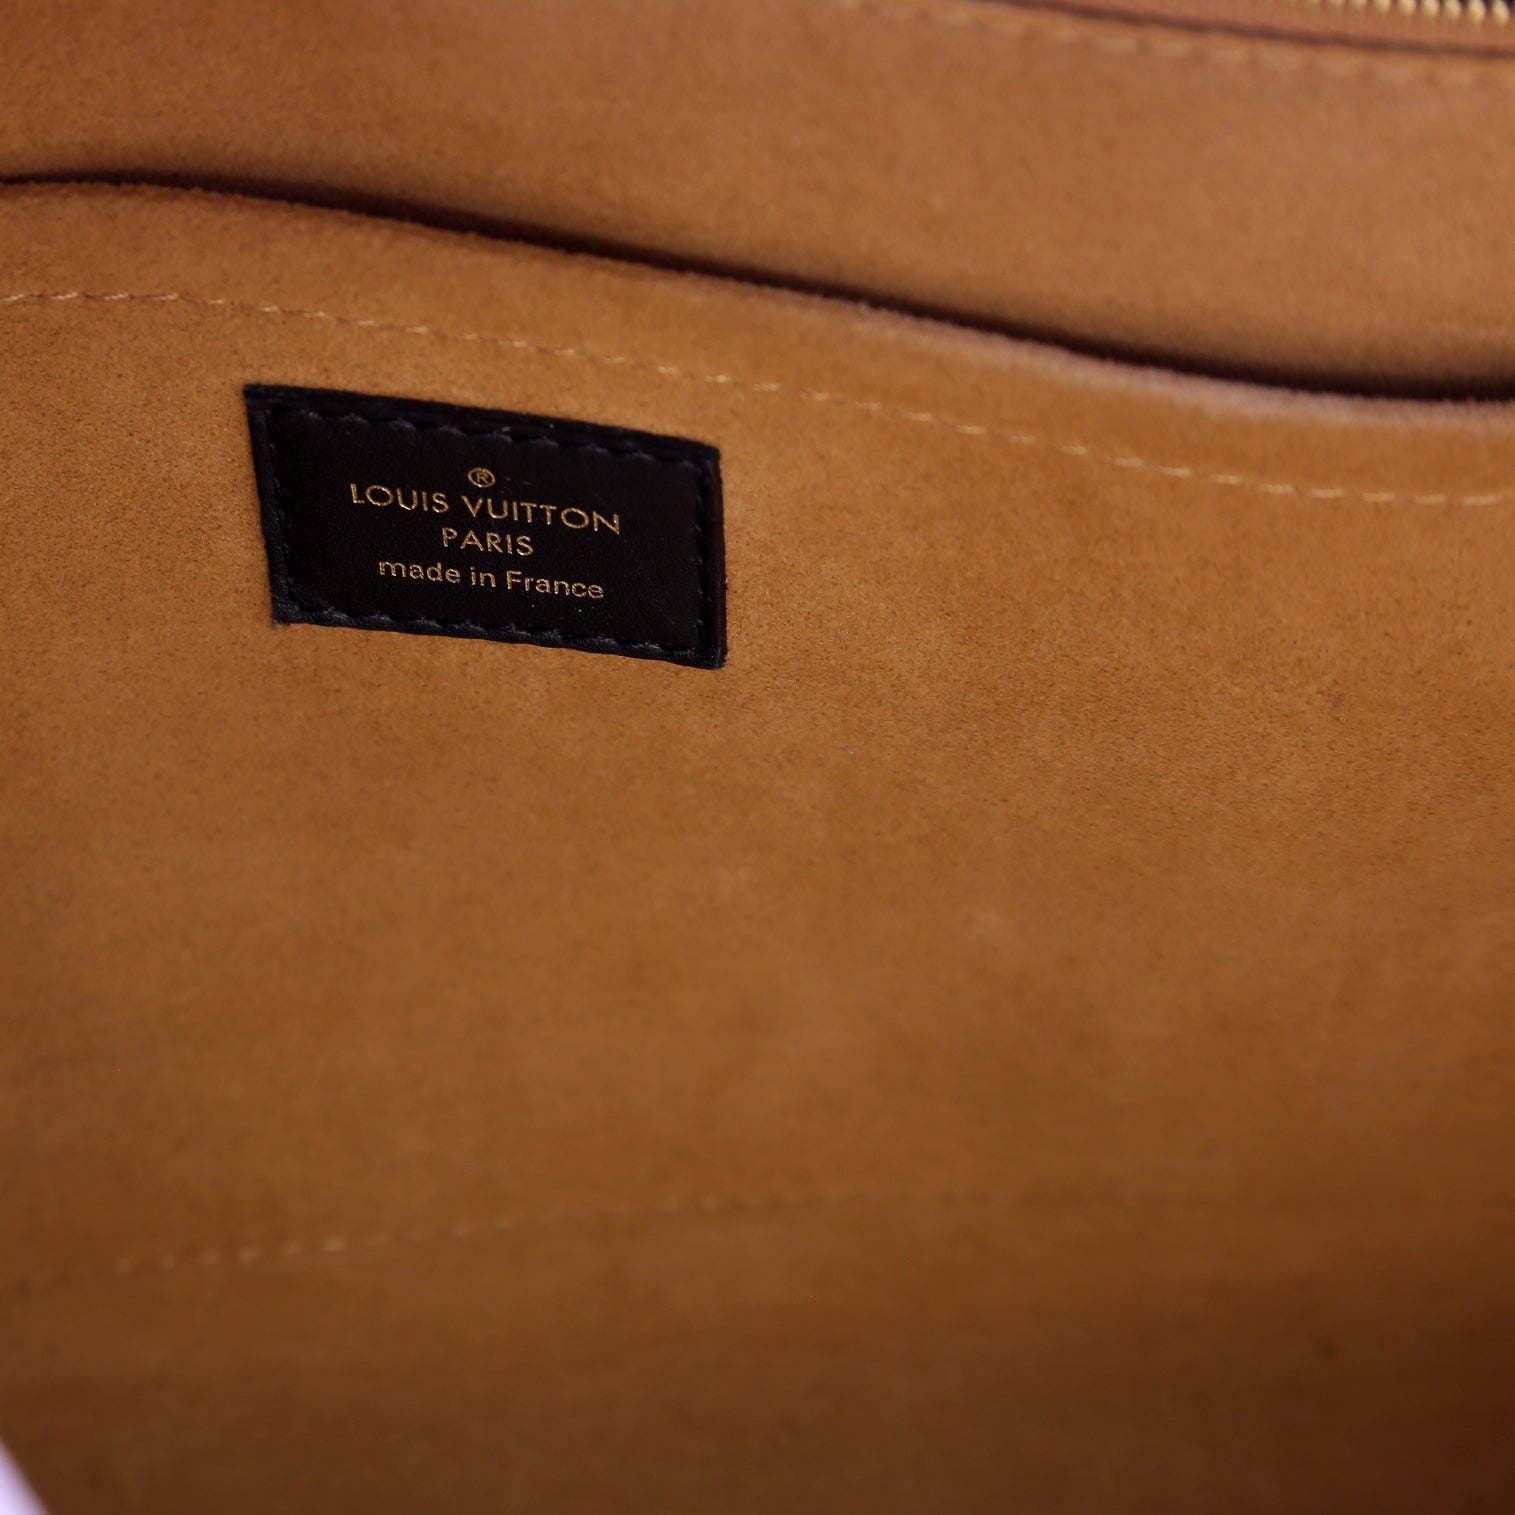 On My Side MM Calfskin/Monogram – Keeks Designer Handbags